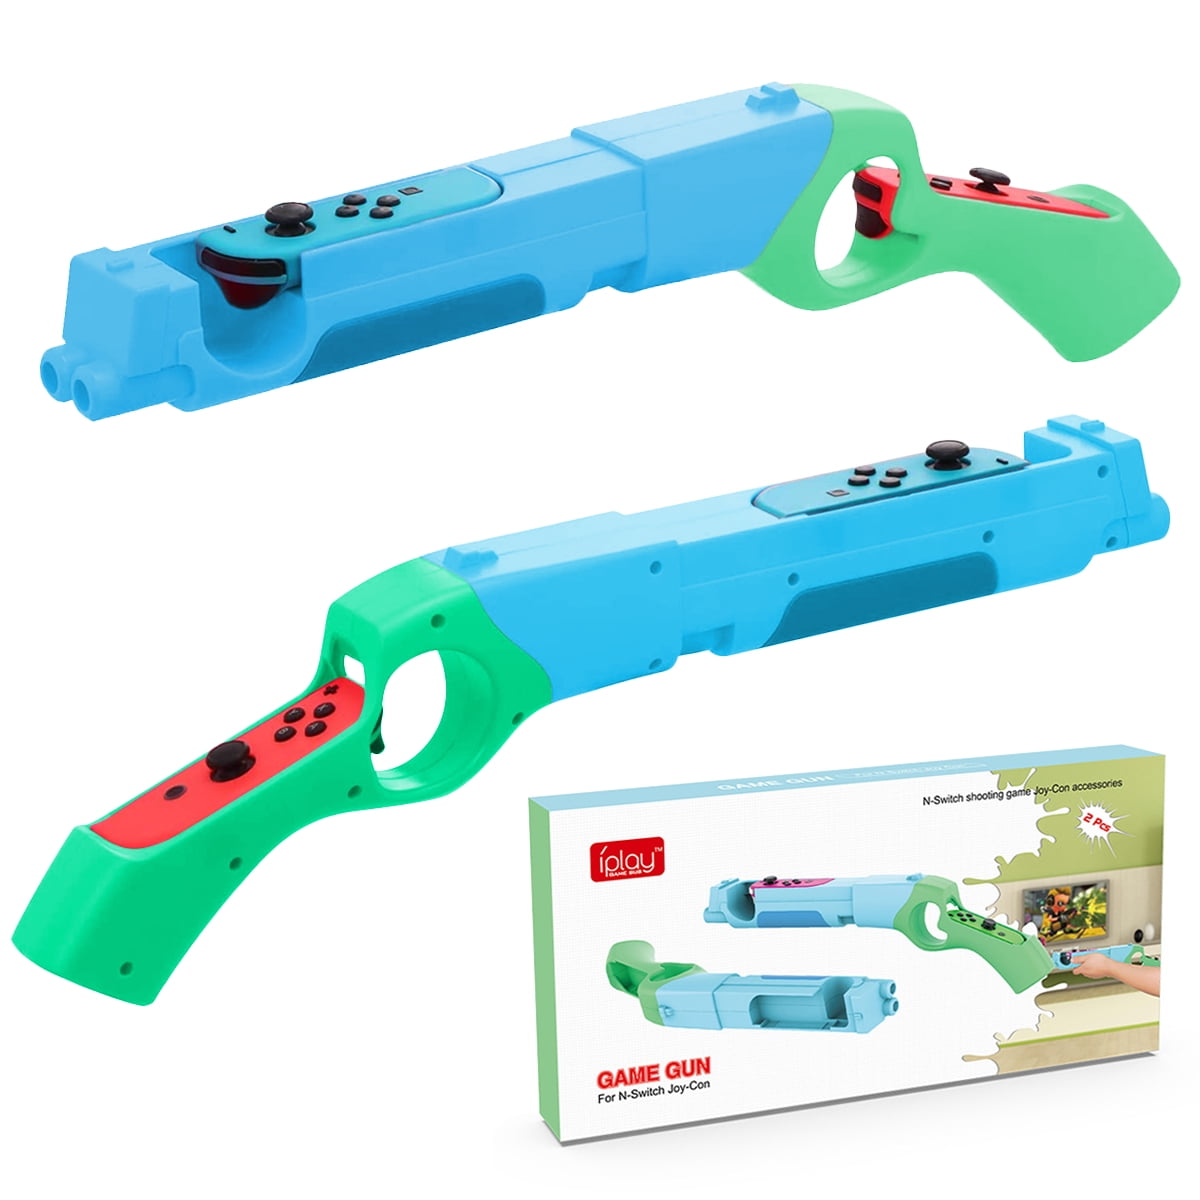 AOPUT 2-Pack Shooting Game Gun for NS Joycon Hand Grip, Shooting Game Gun for Nintendo Switch Shooting Games,Doom 4, Splatoon 2, Wolfenstein 2, Big Buck Hunter Arcade